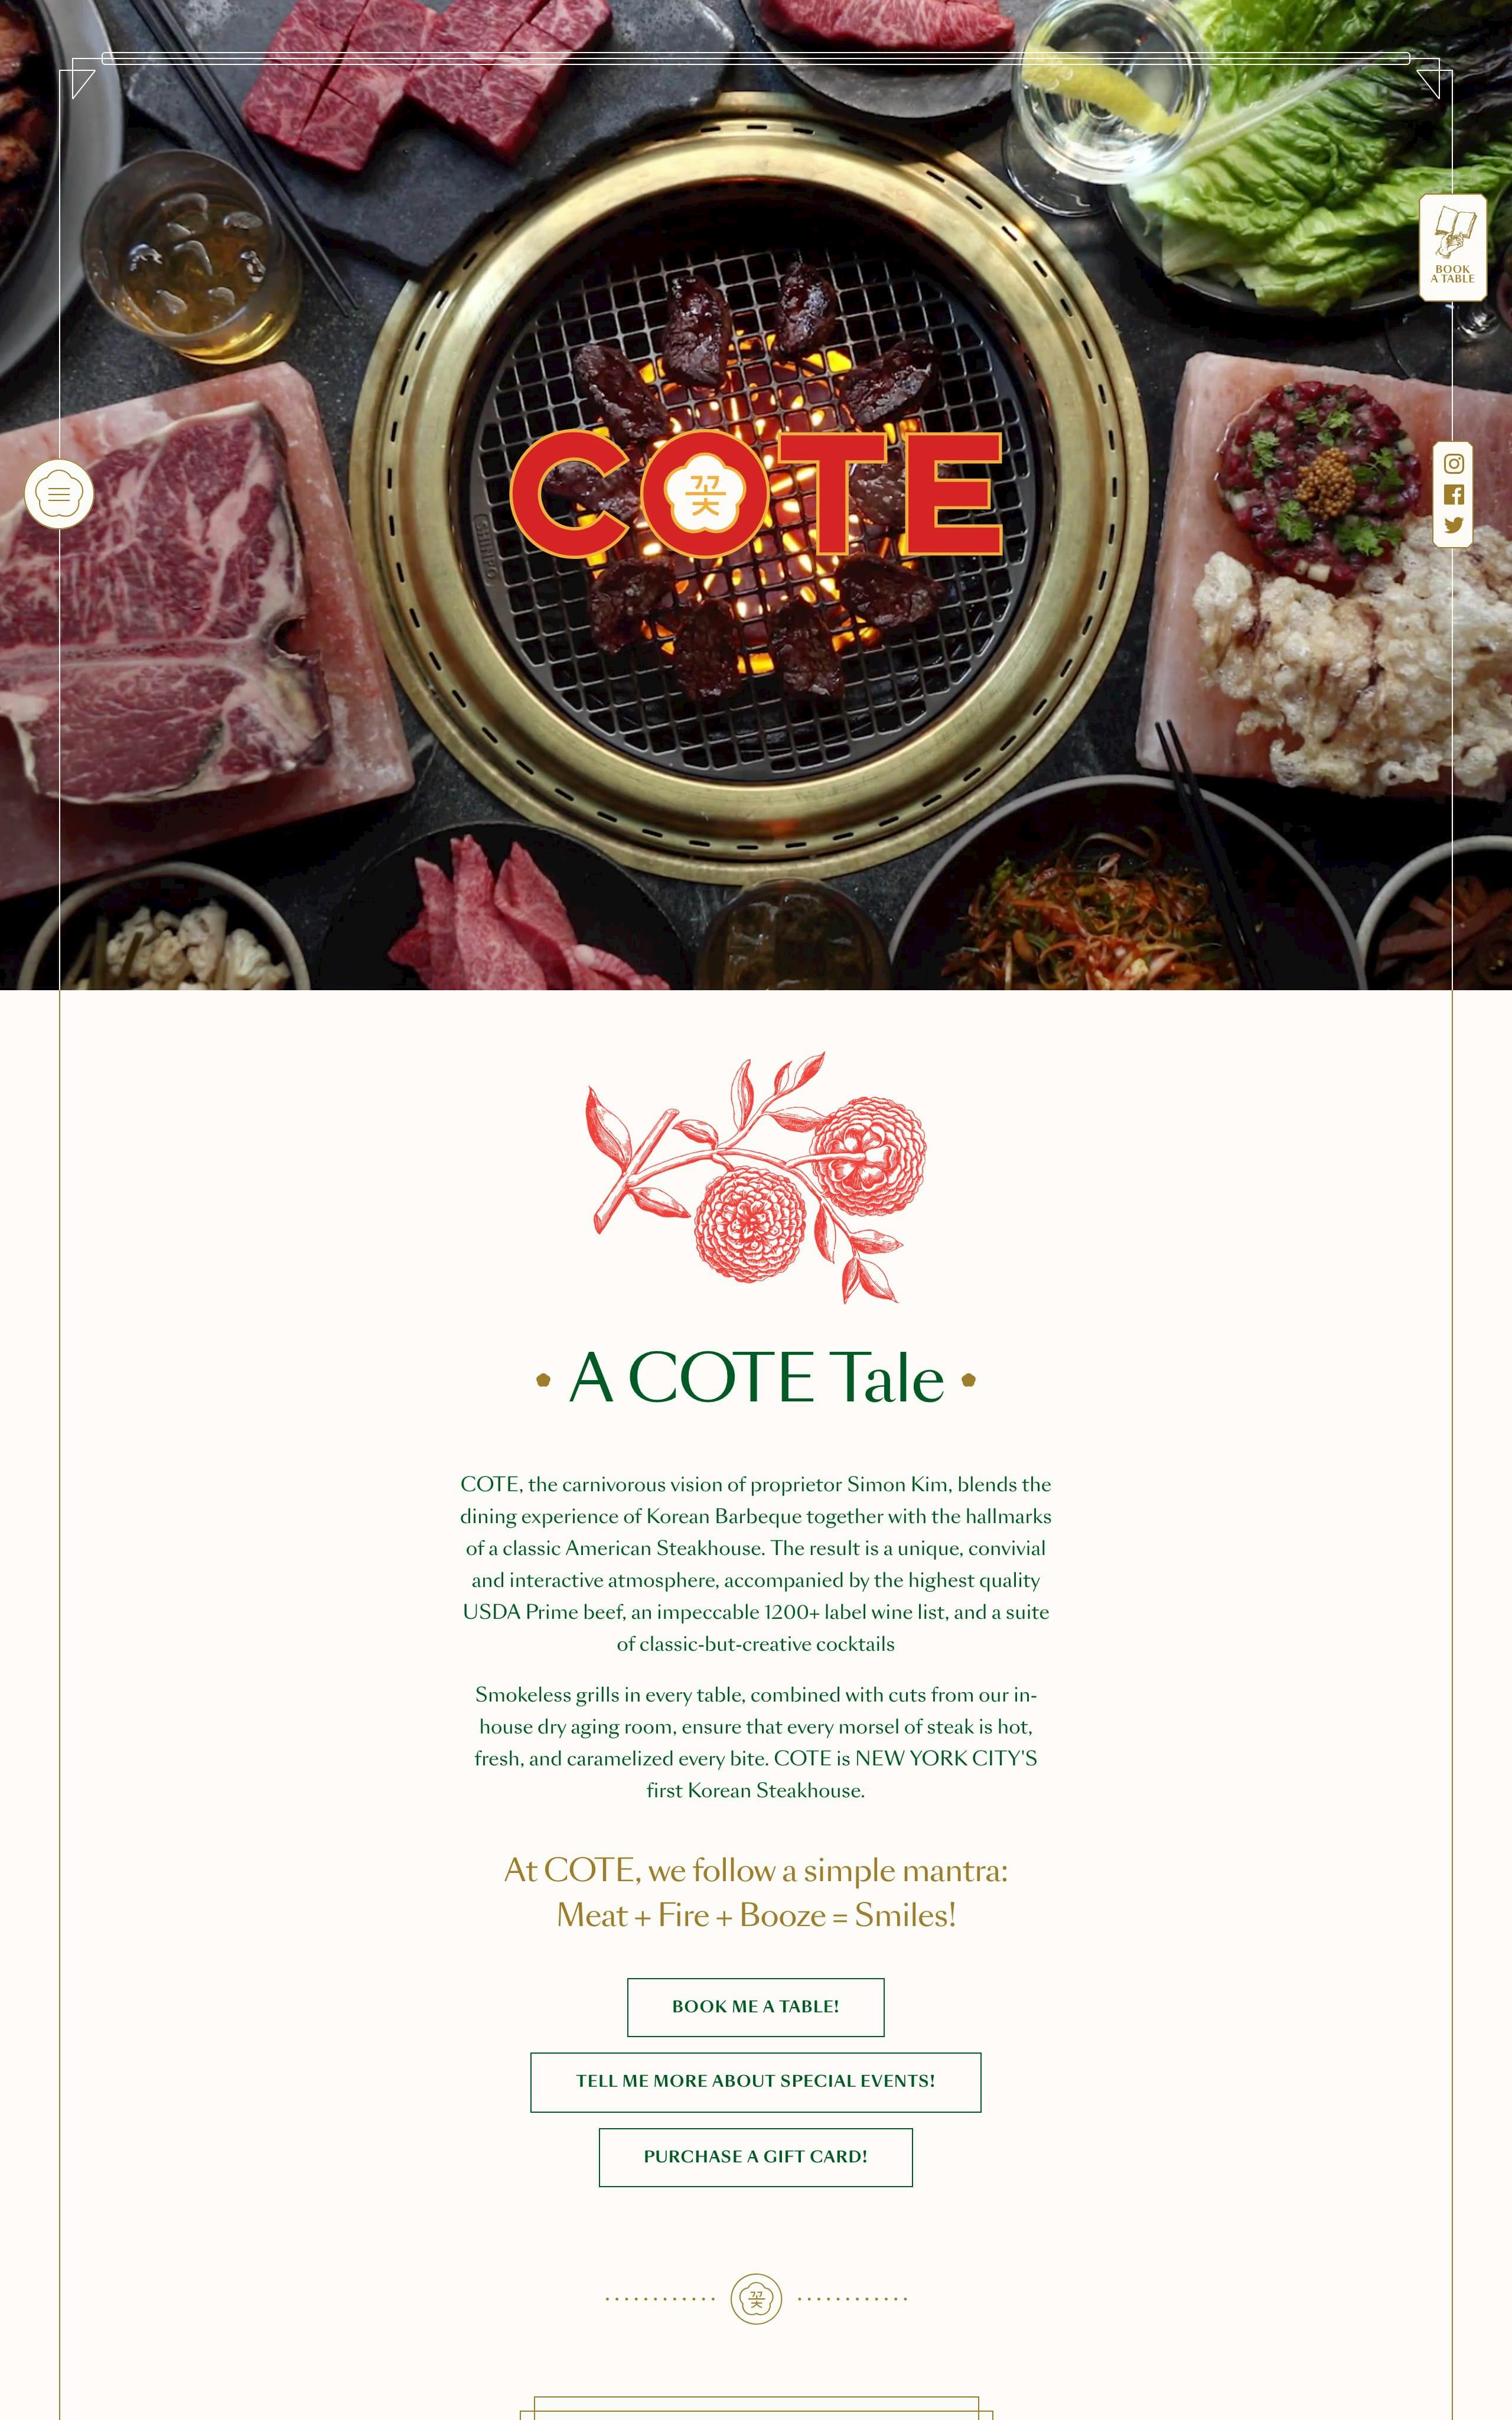 COTE Website Screenshot